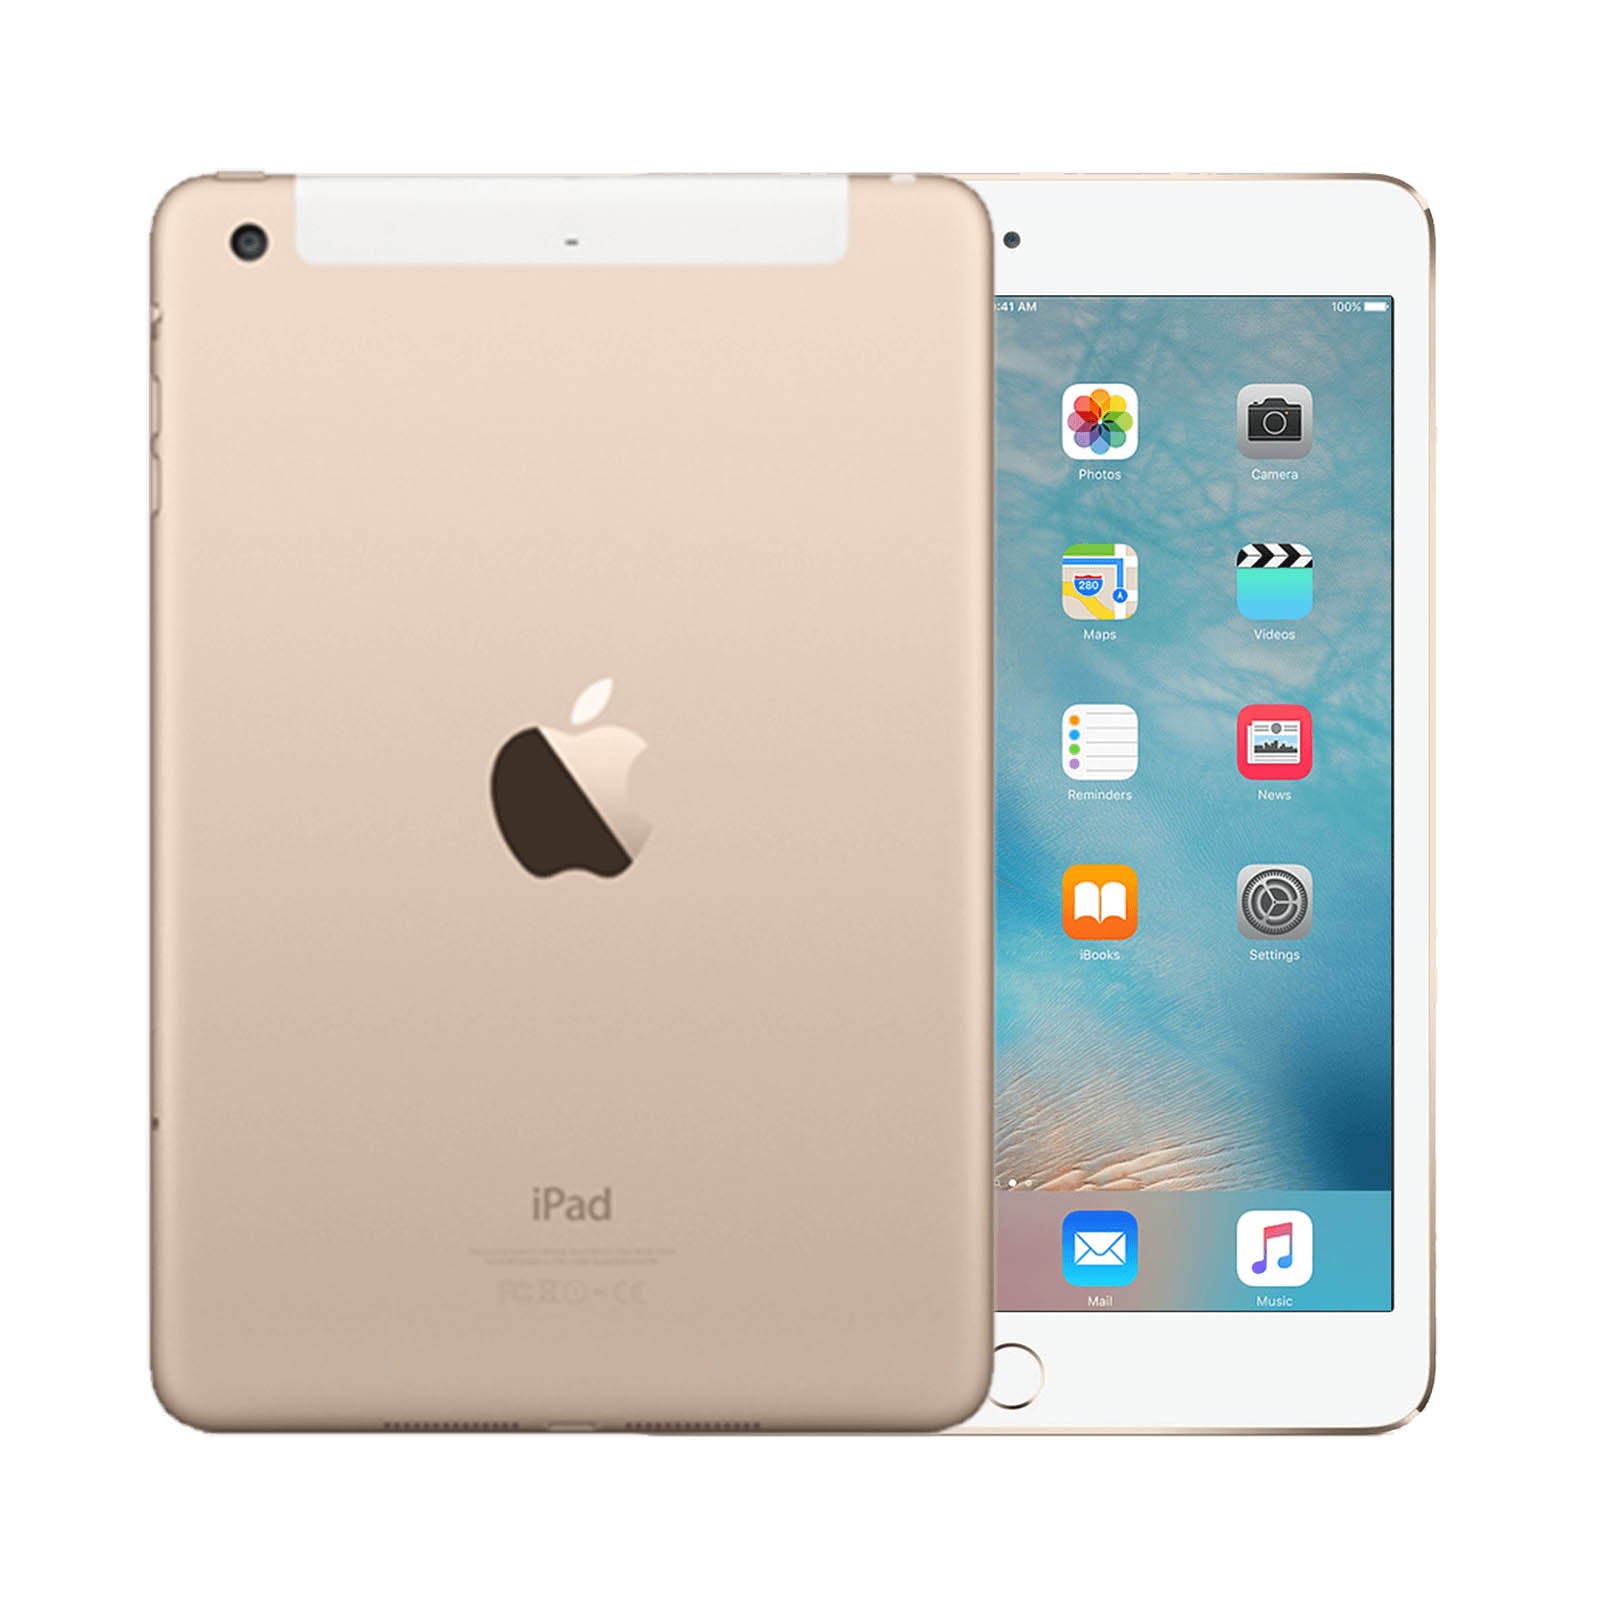 Apple iPad mini 3 128GB Gold Good - Unlocked